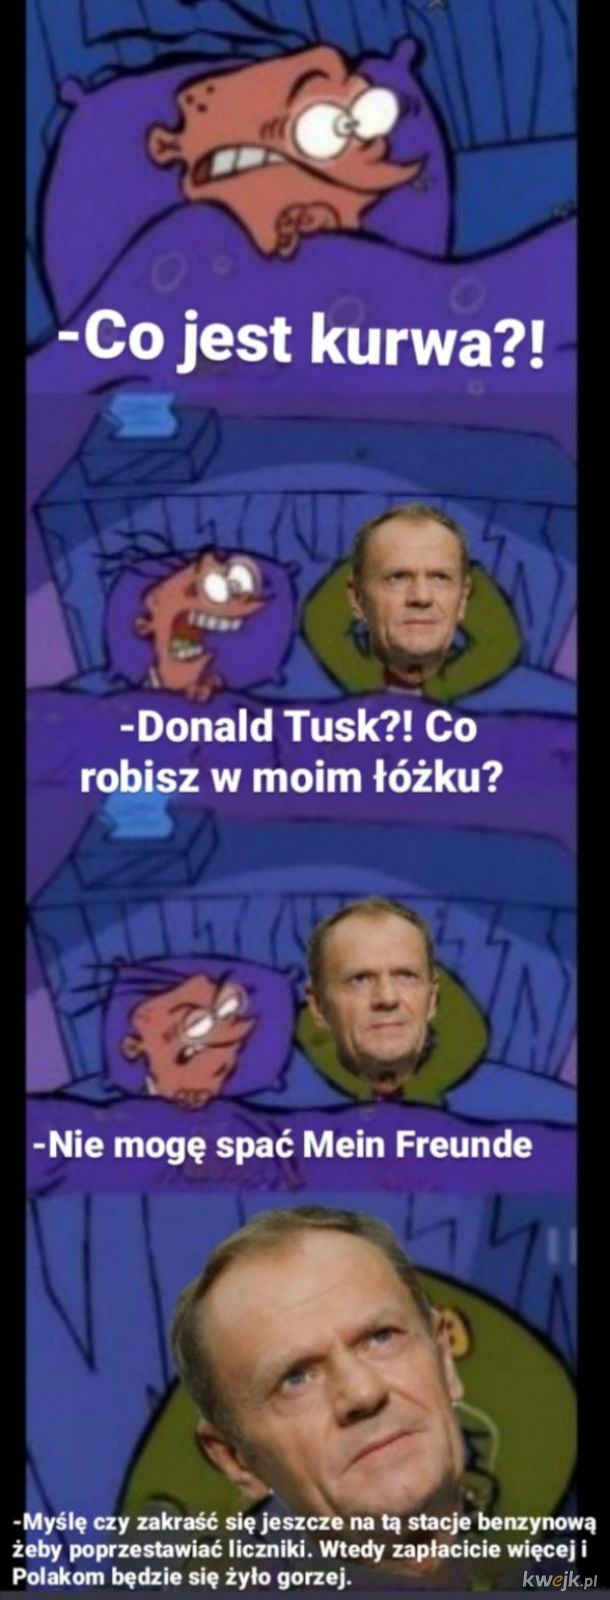 Donald Tusk